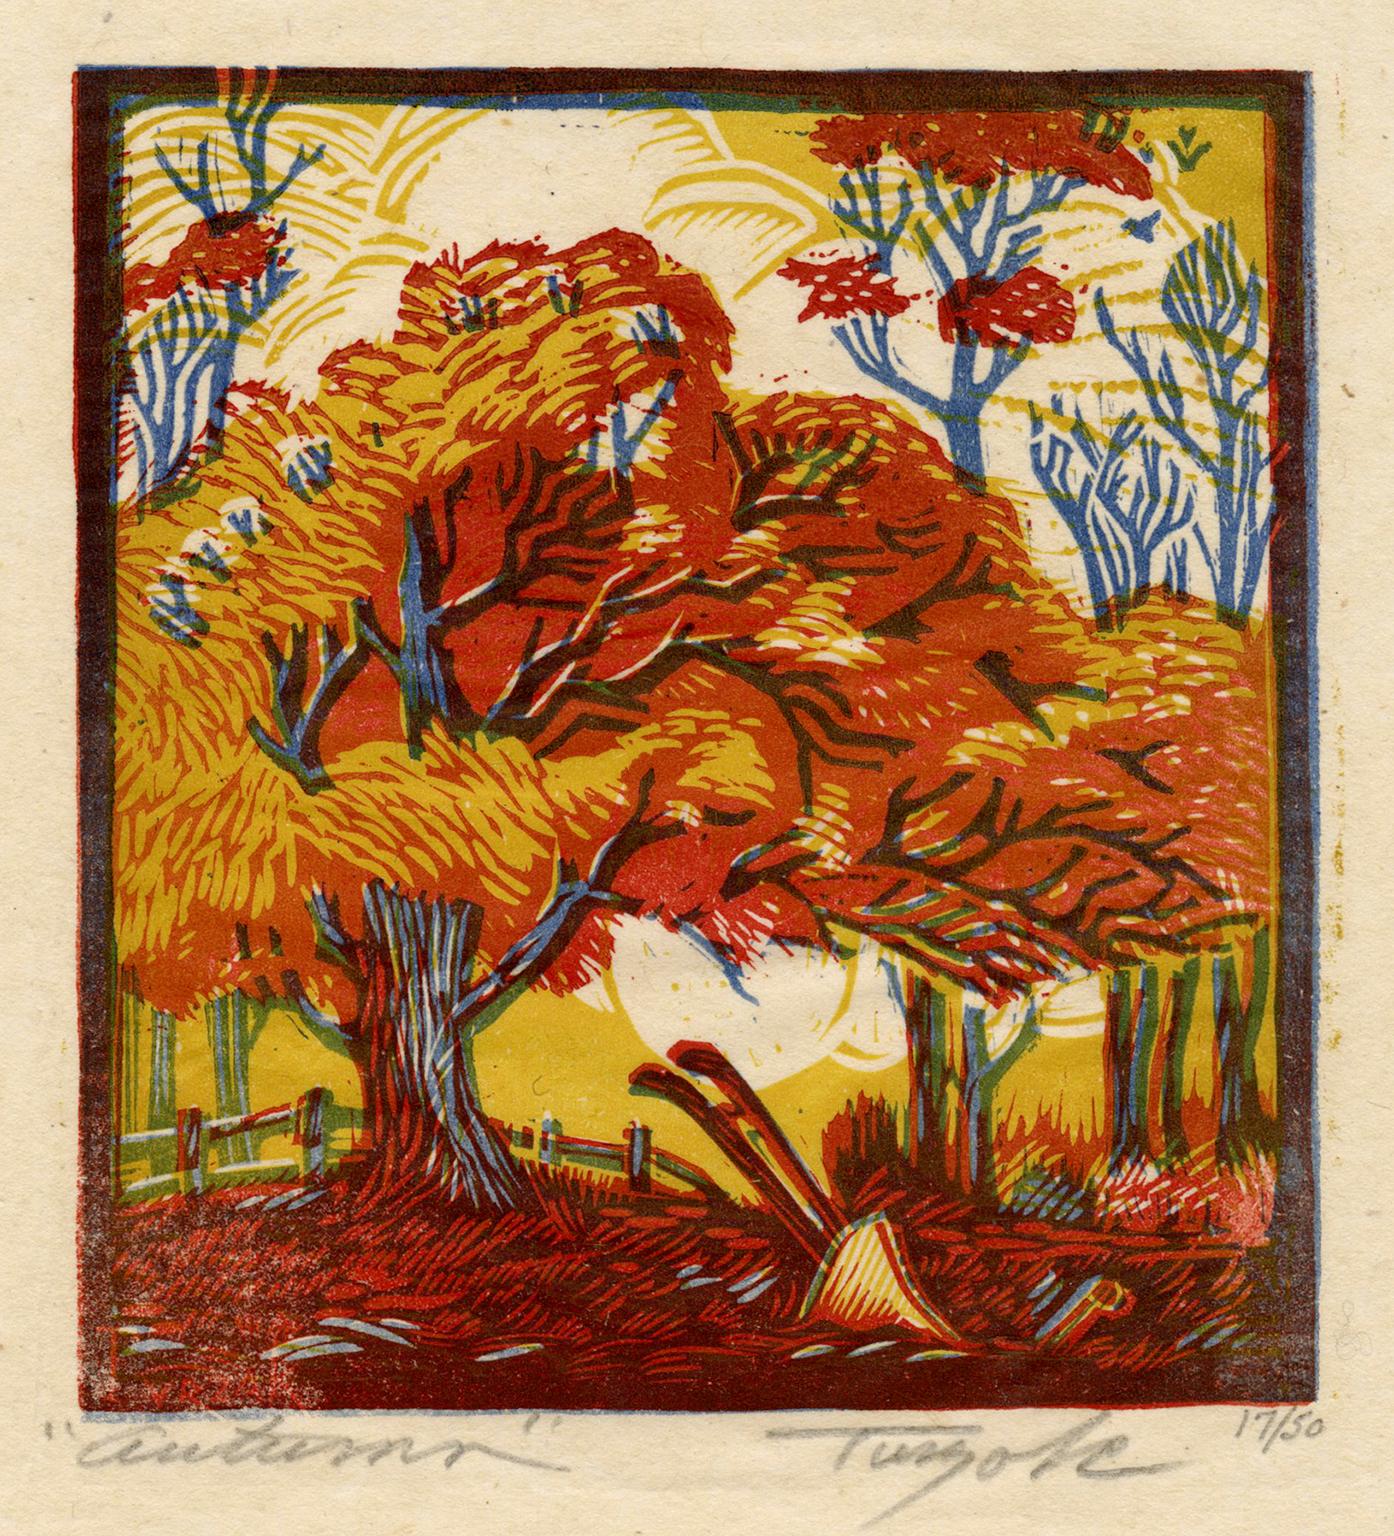 Charles Turzak Figurative Print - 'Autumn' — 1920s American Modernism, Color Woodcut